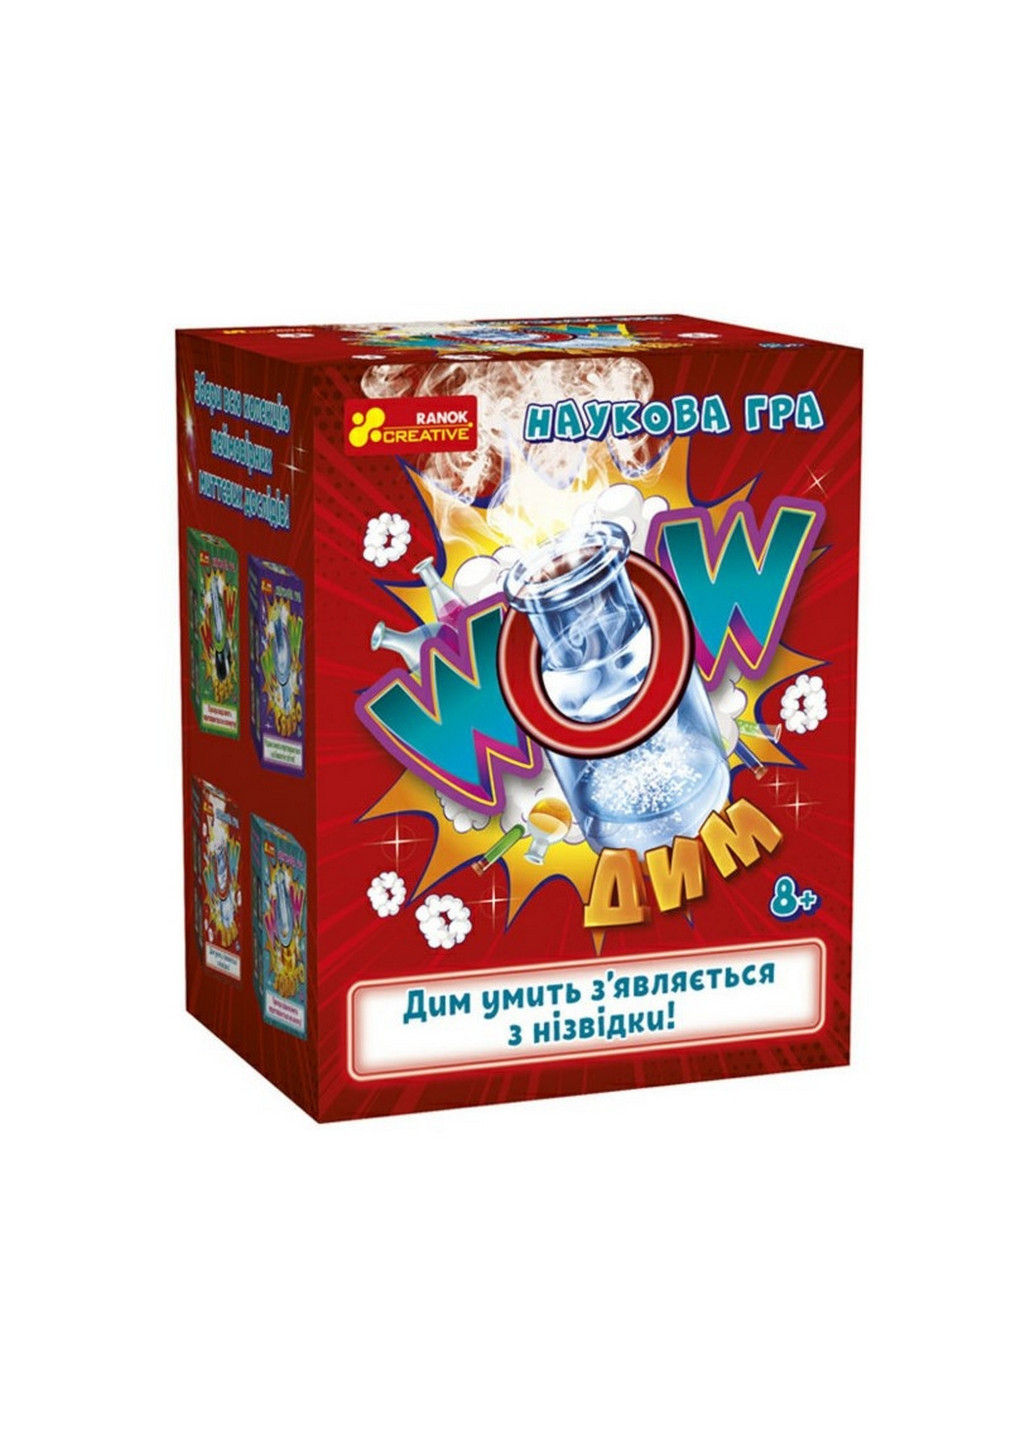 Детская научная игра дым украинском языке 13,7х10,8х8,7 см Ranok Creative (260512524)